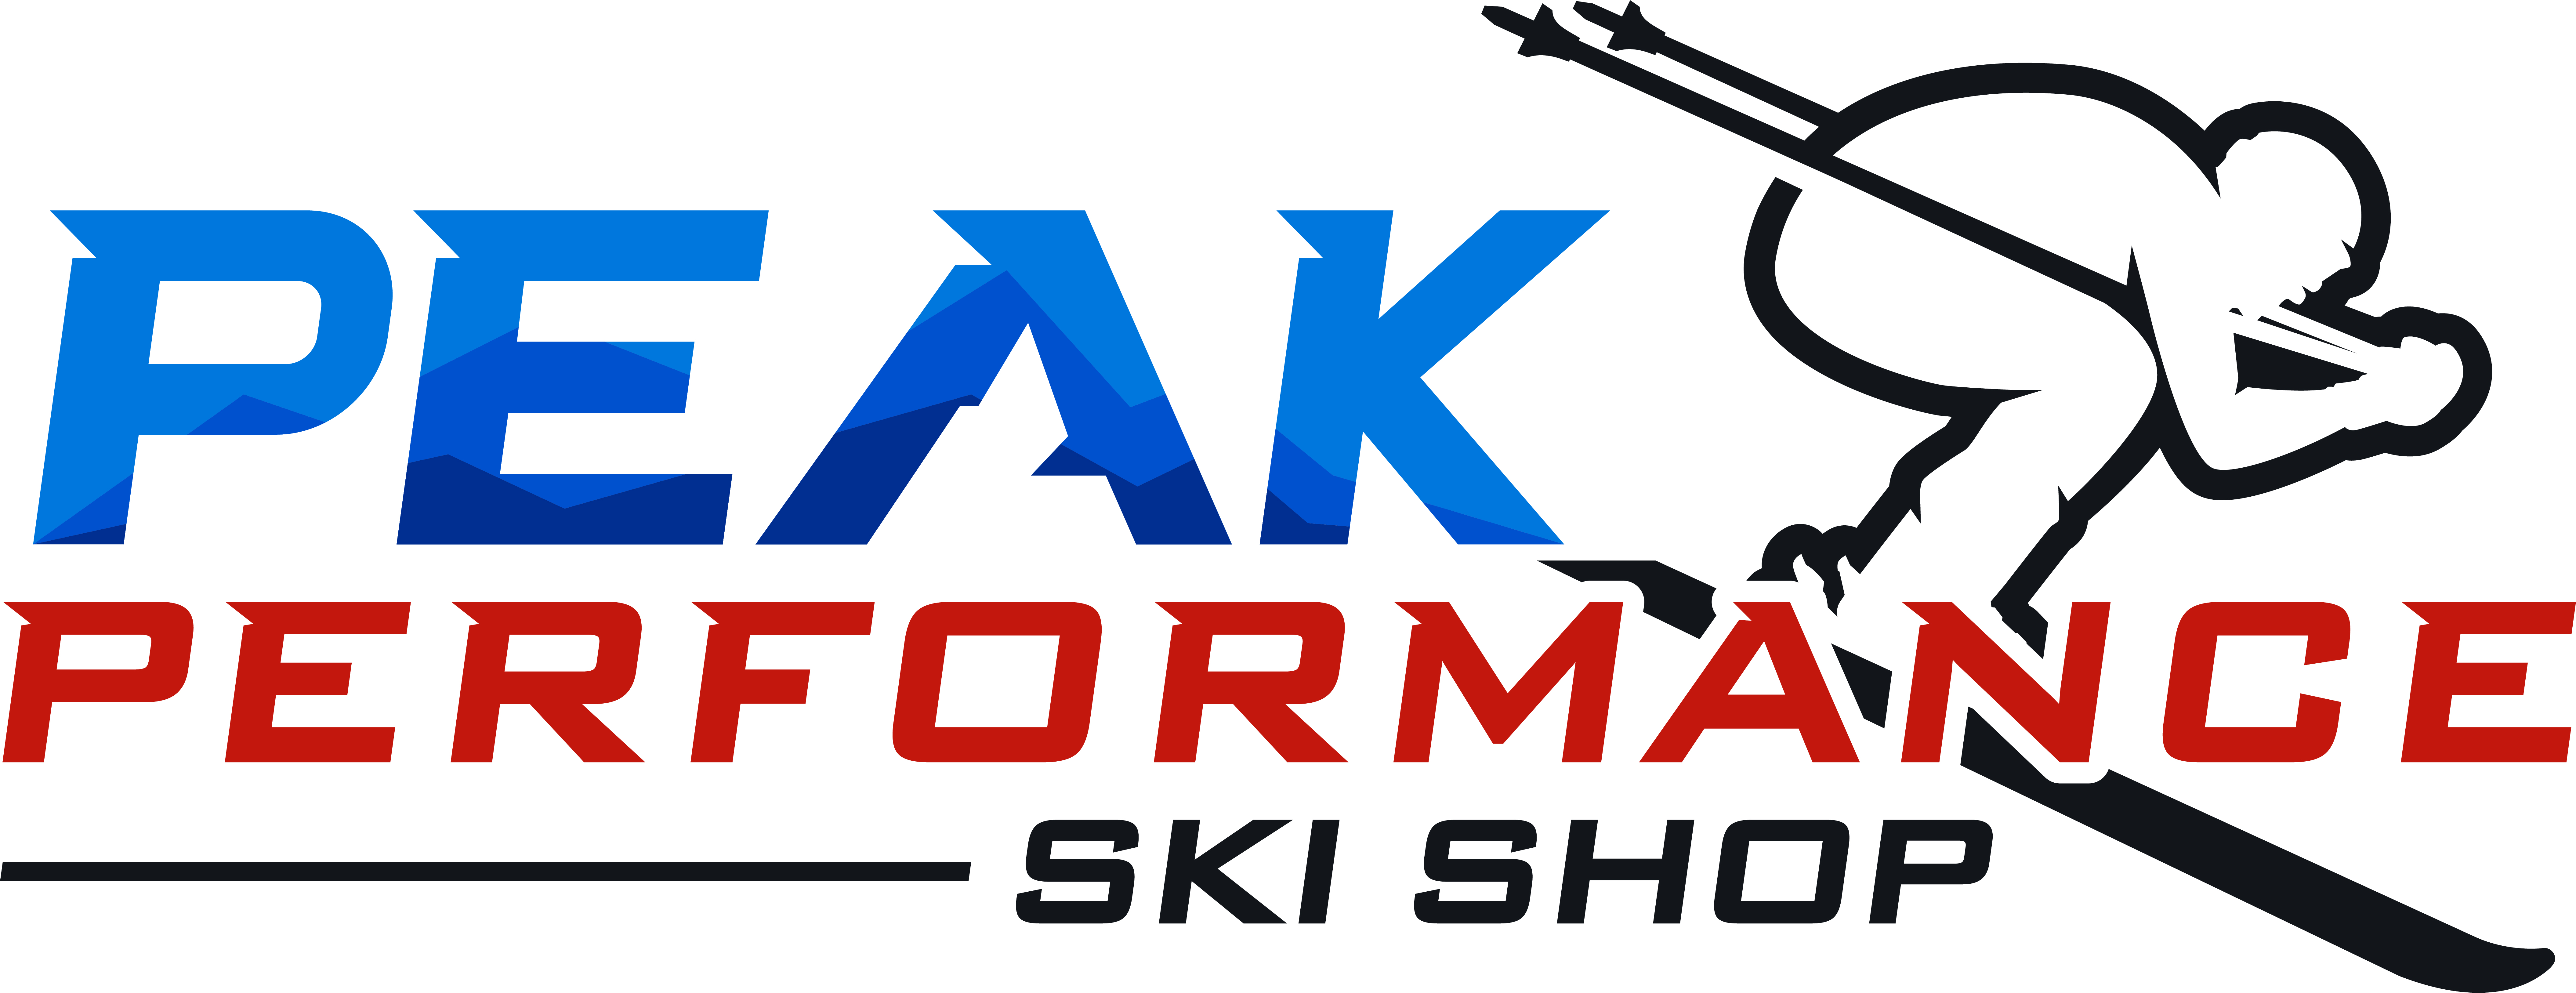 ARCTICA ADULT SIDE ZIP PANT 2.0 - Peak Performance Ski Shop